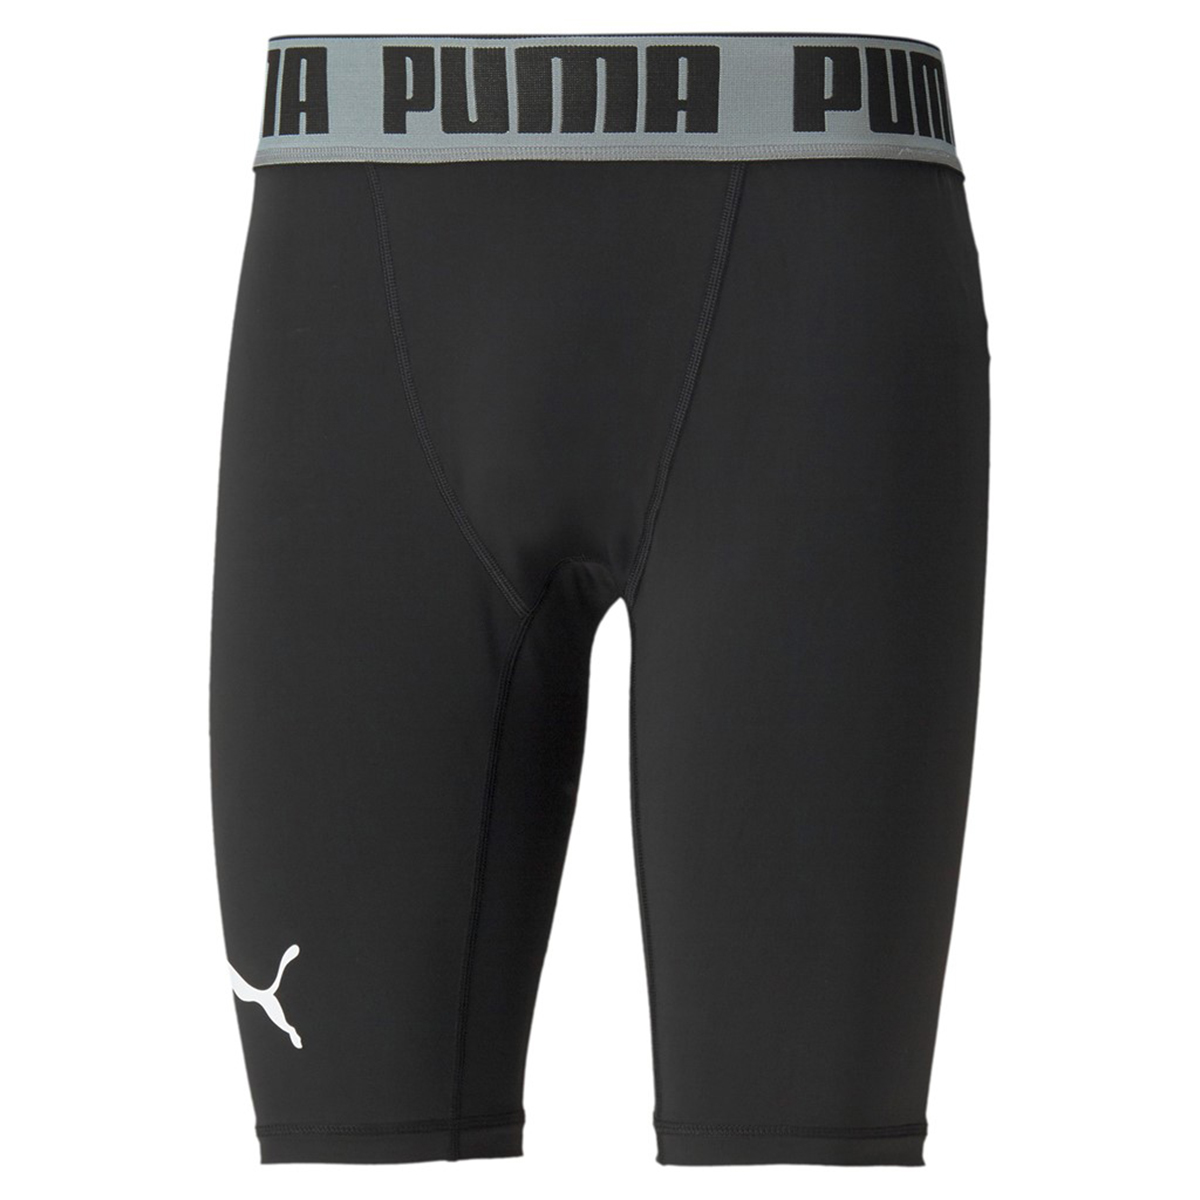 PUMA BBall Compression Shorts Herren Basketball Sport Hose 605078 Schwarz